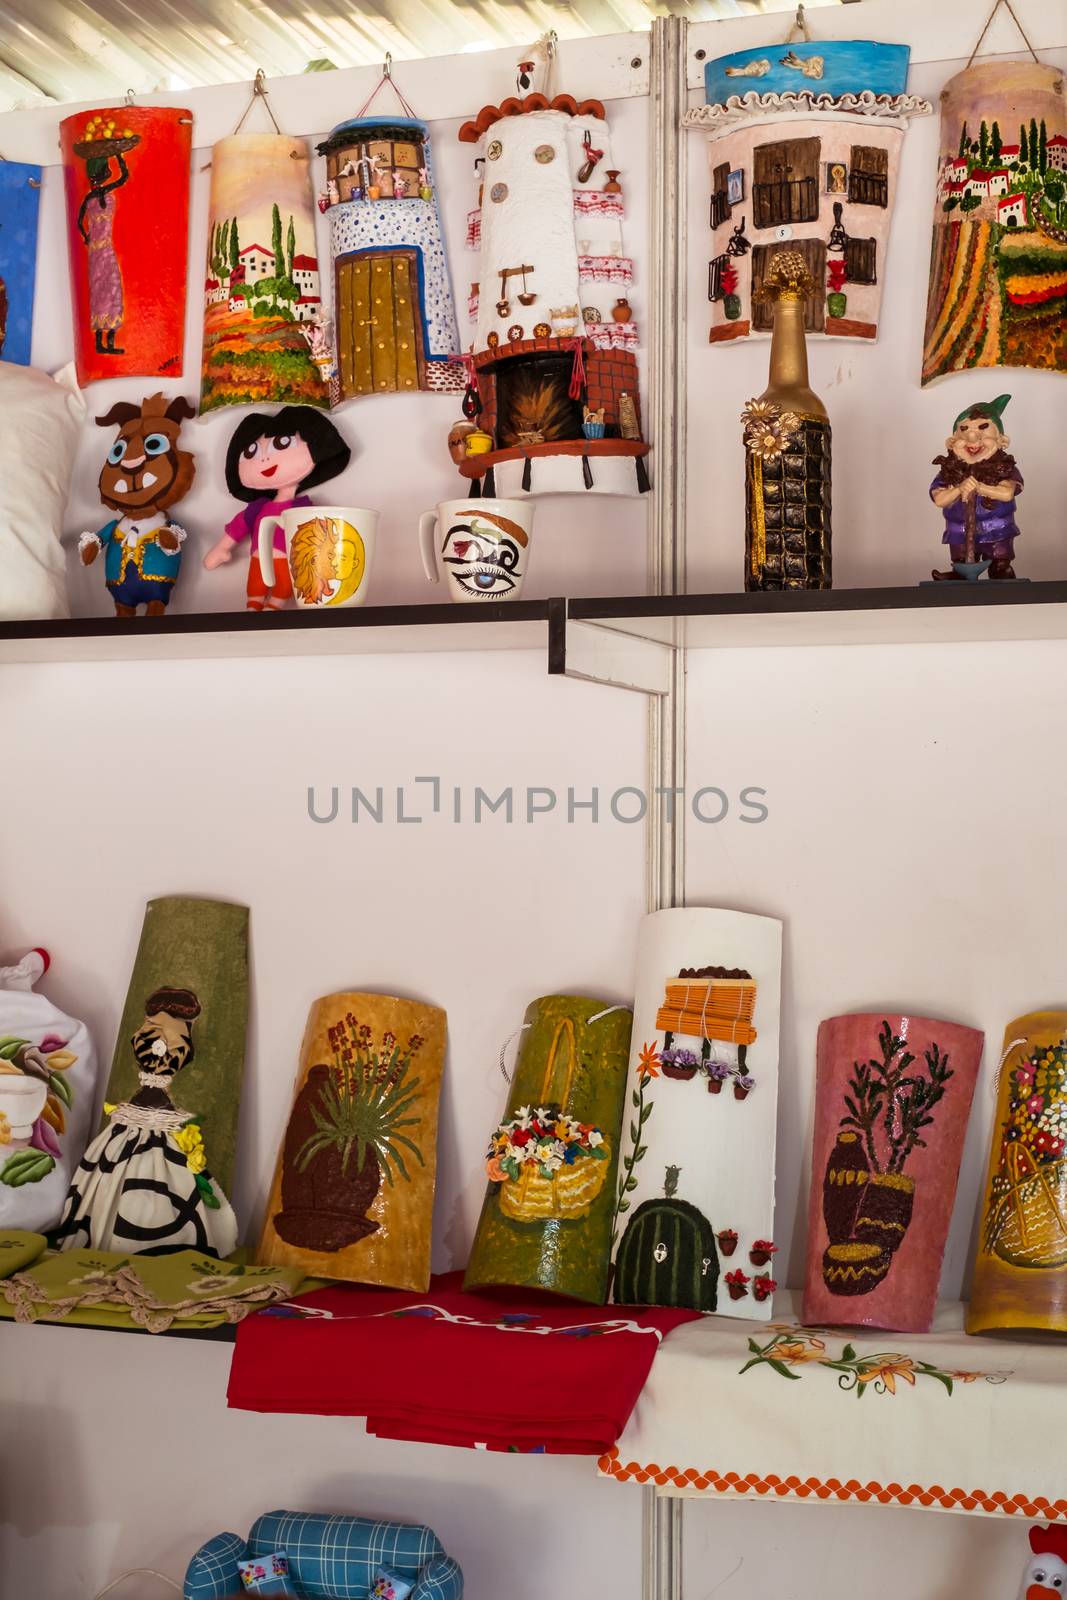 Malaga, Spain - May 18, 2018. Handicraft store with Spanish souvenir in Malaga city, Spain.